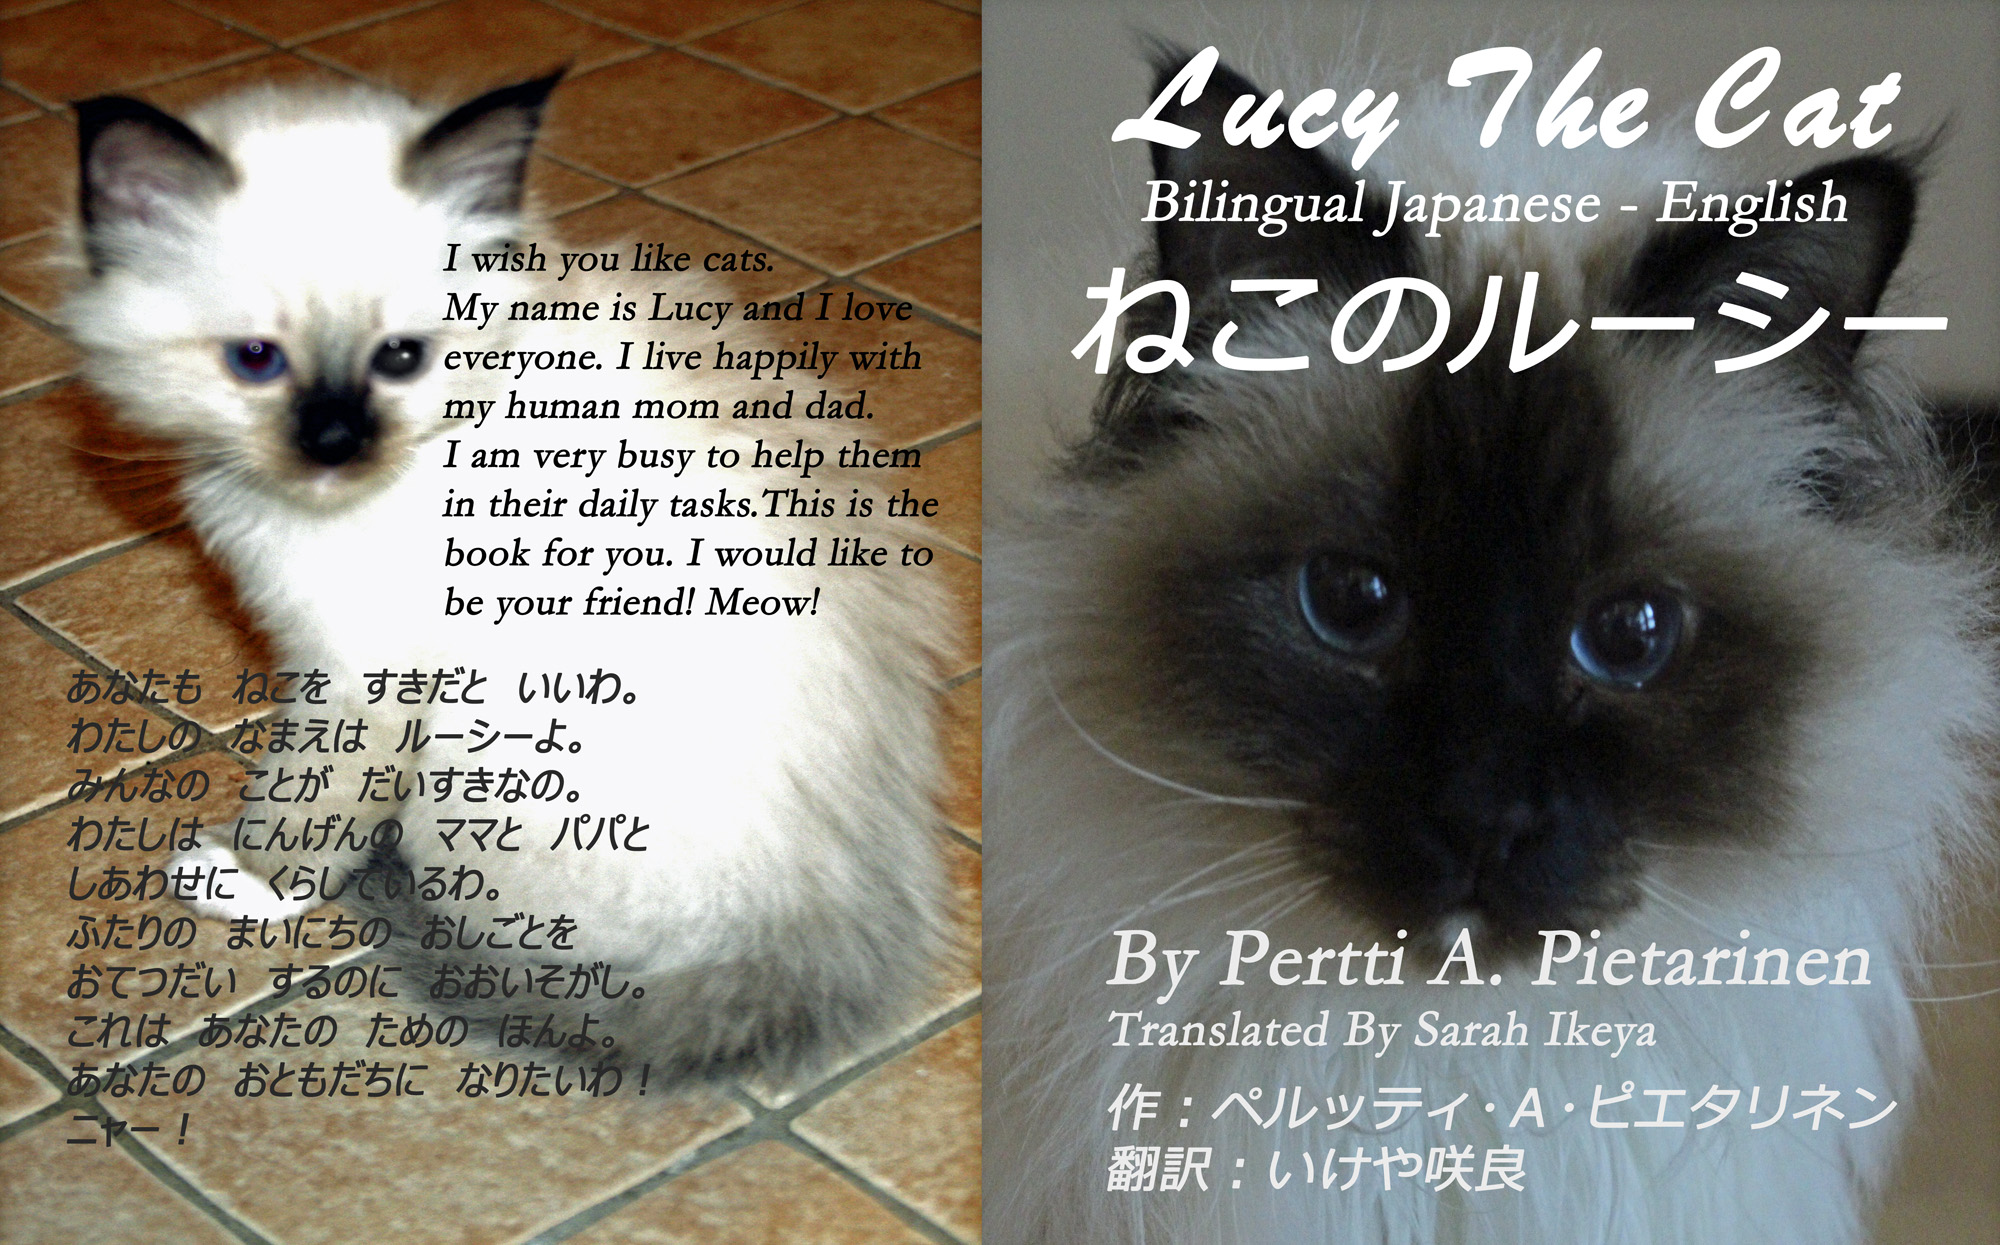 Lucy The Cat Bilingual Japanese – English by Pertti A Pietarinen